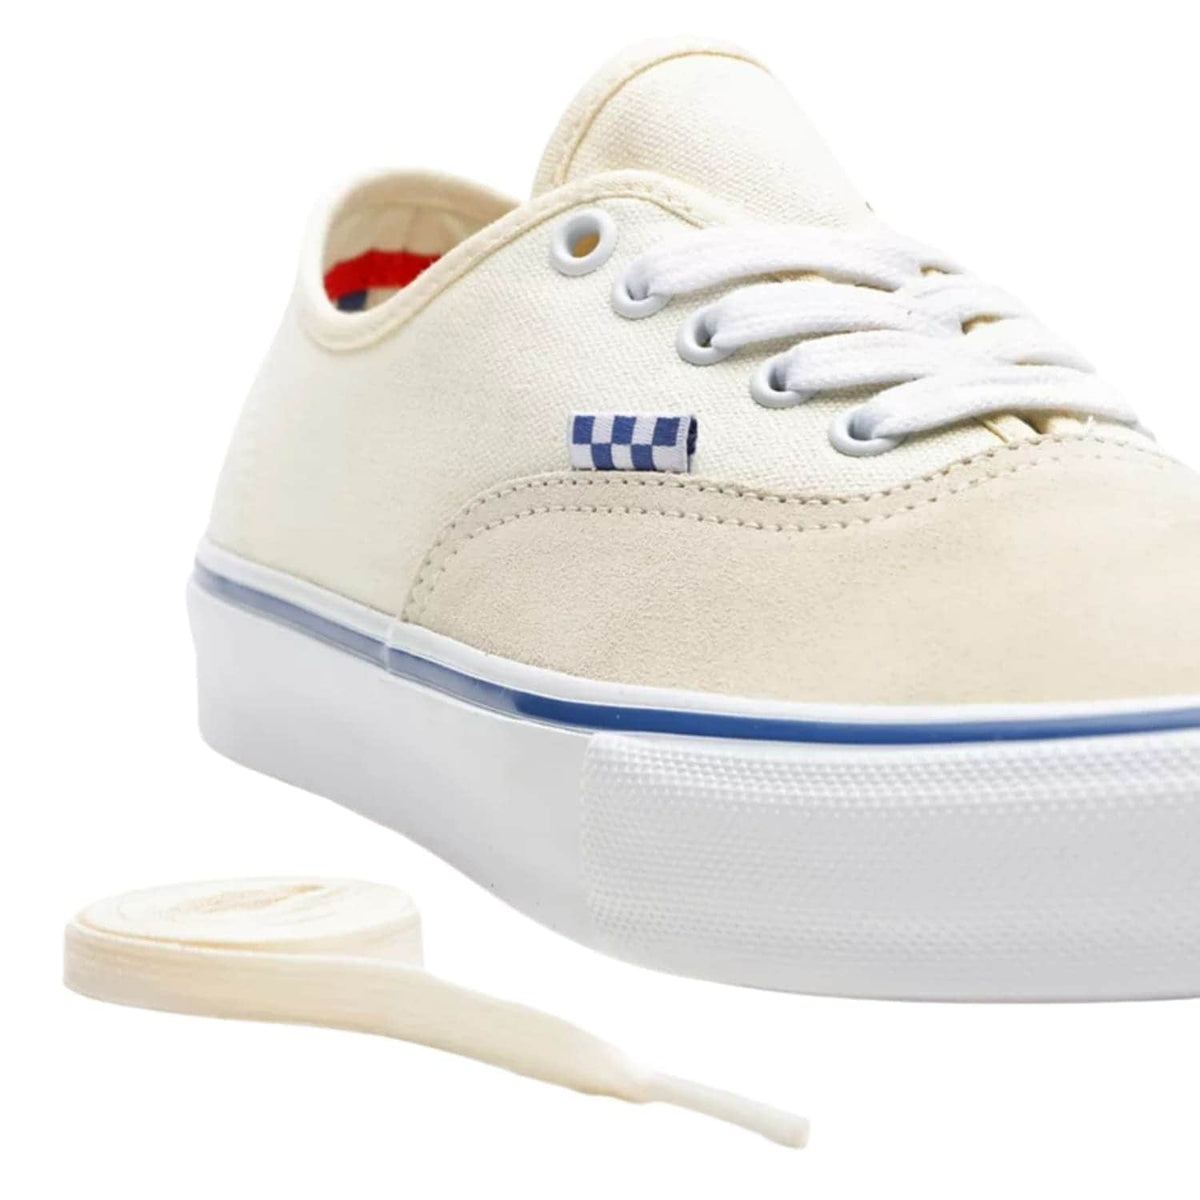 Vans Era Pro Skate Shoes - Off White - Mens Skate Shoes by Vans